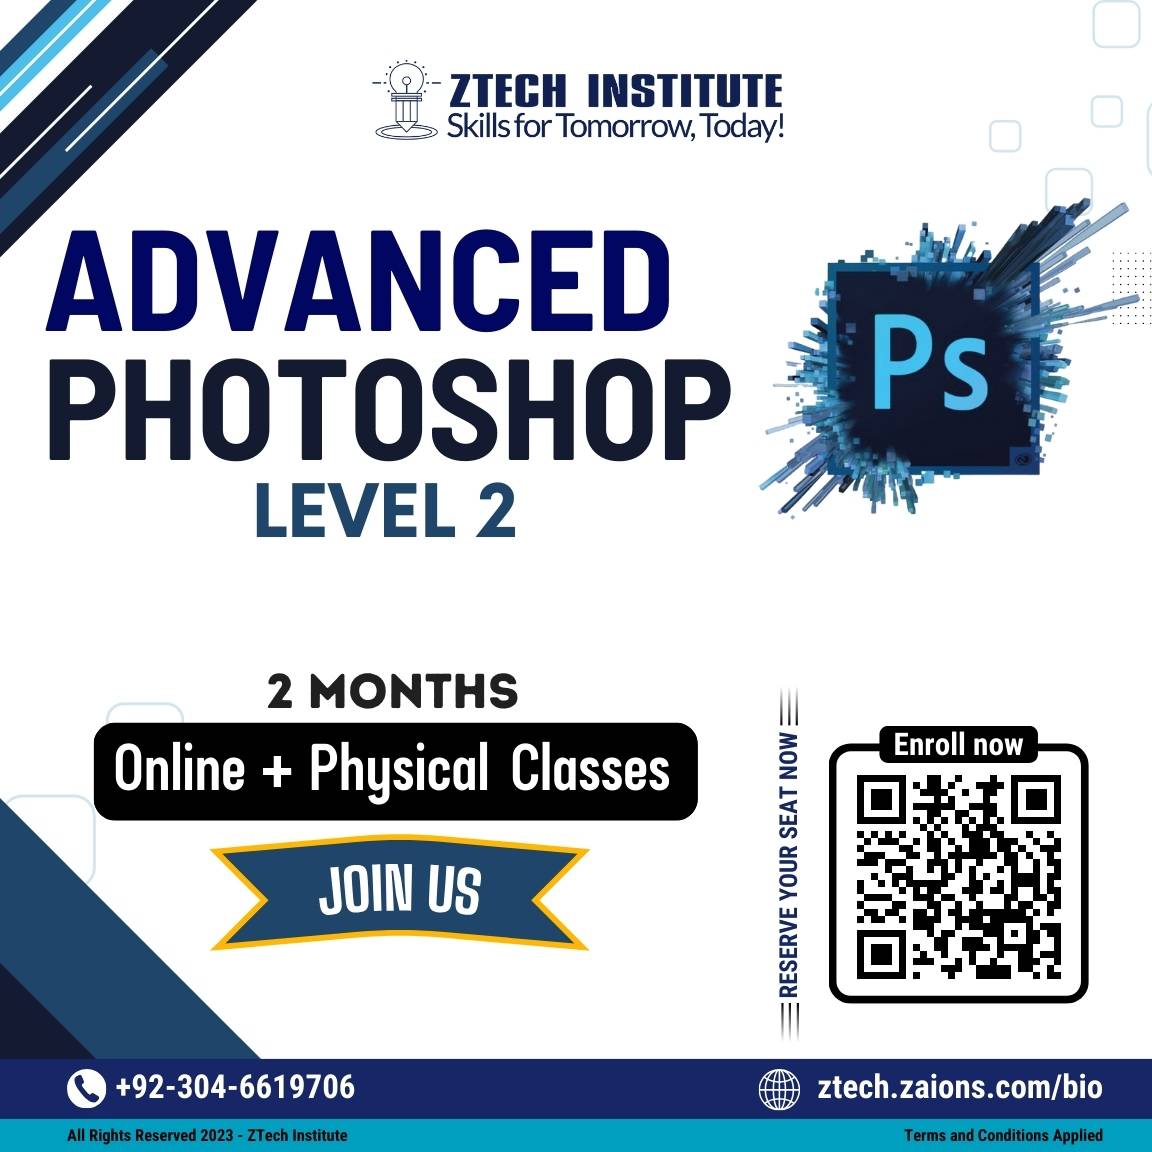 advanced-photoshop-level2-2-month-zaions-ahsan-mahmood-trizlink-aoenahsan-software-development-services-upwork